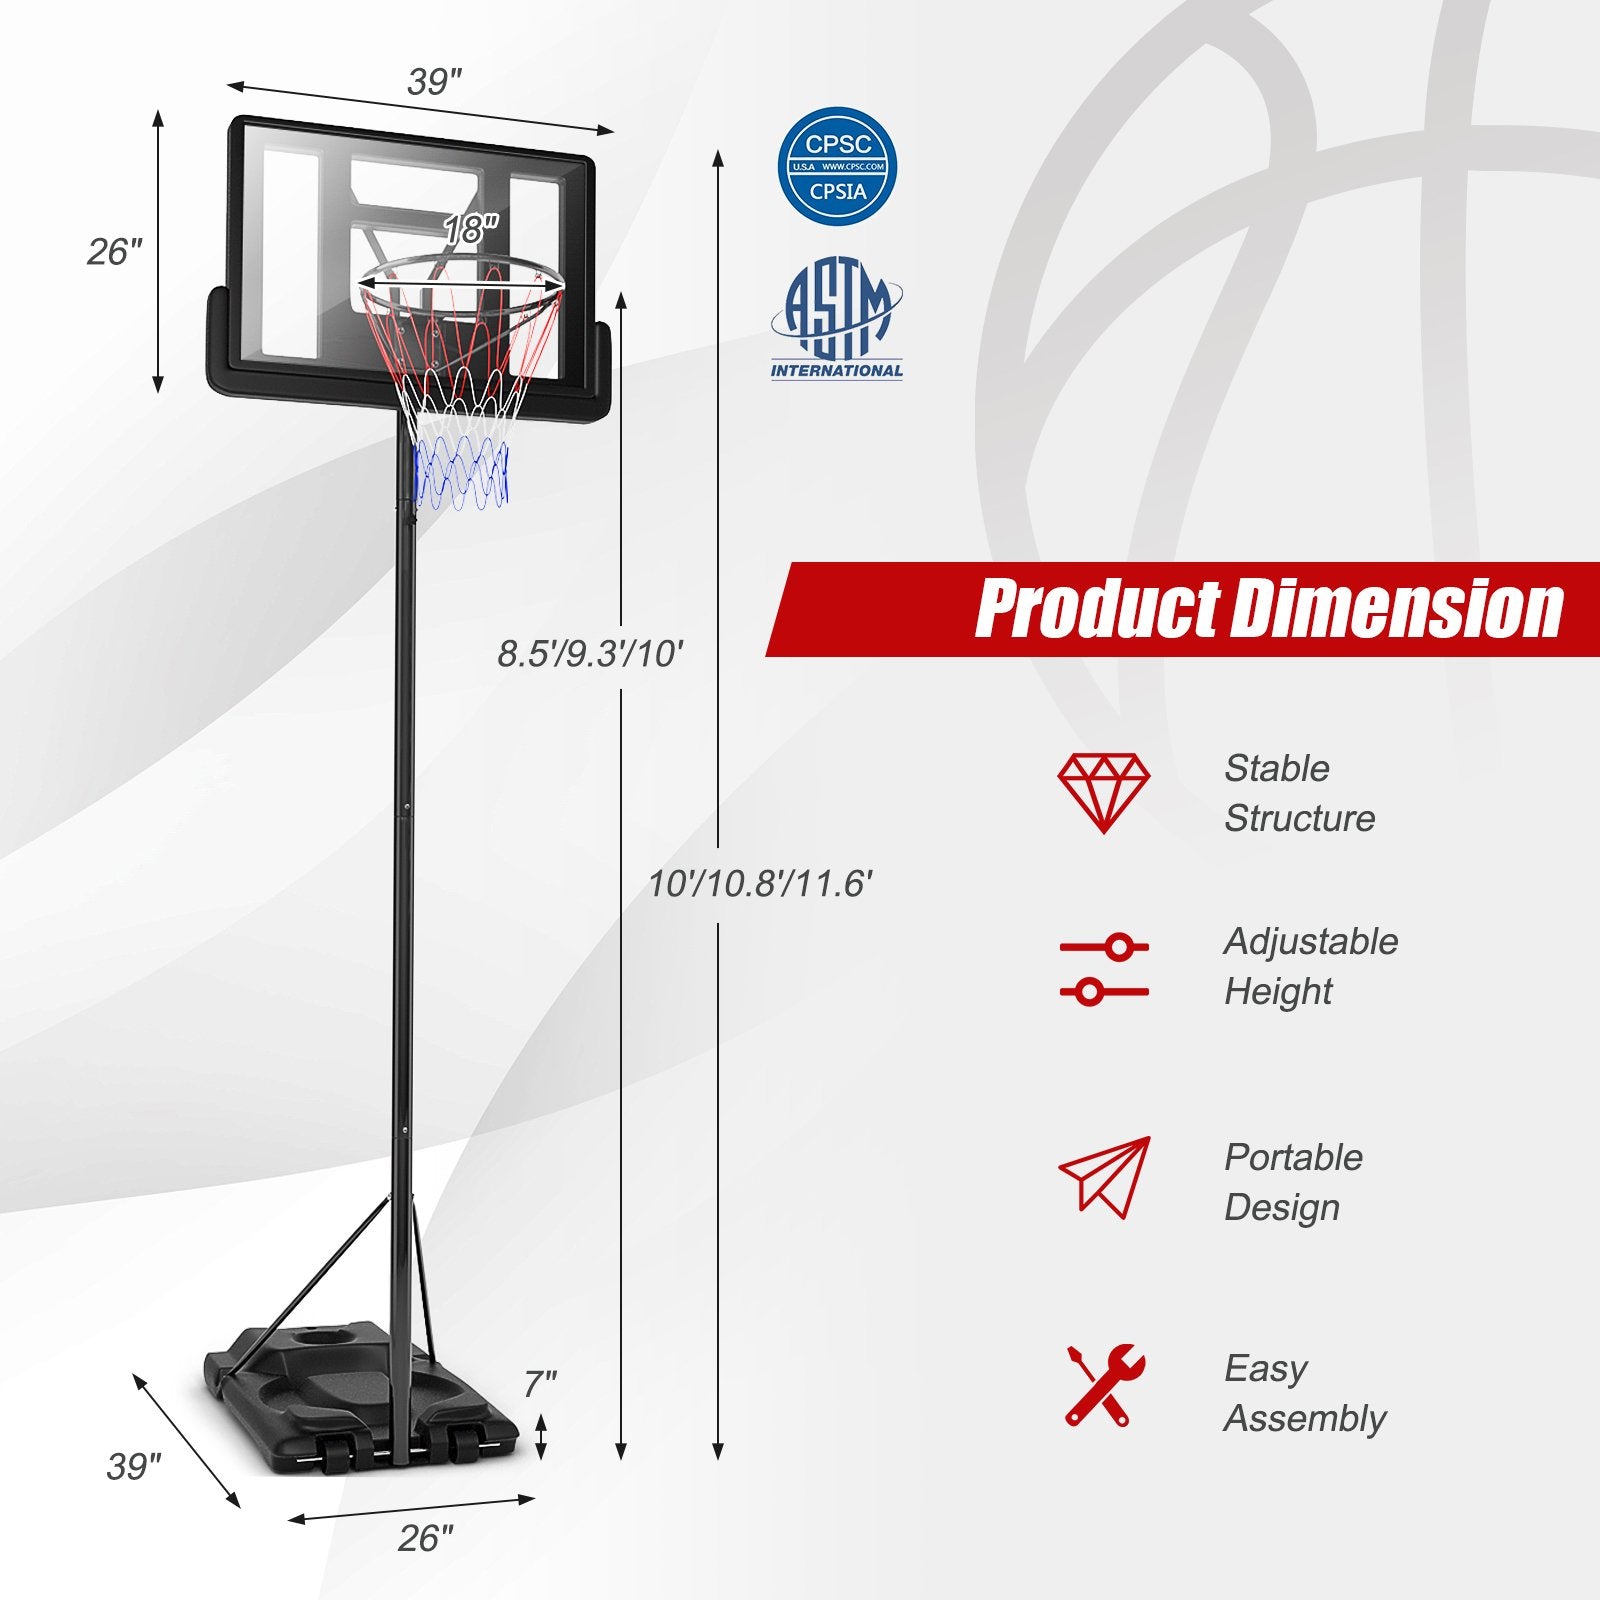 Height Adjustable Portable Shatterproof Backboard Basketball Hoop with 2 Nets, Black - Gallery Canada